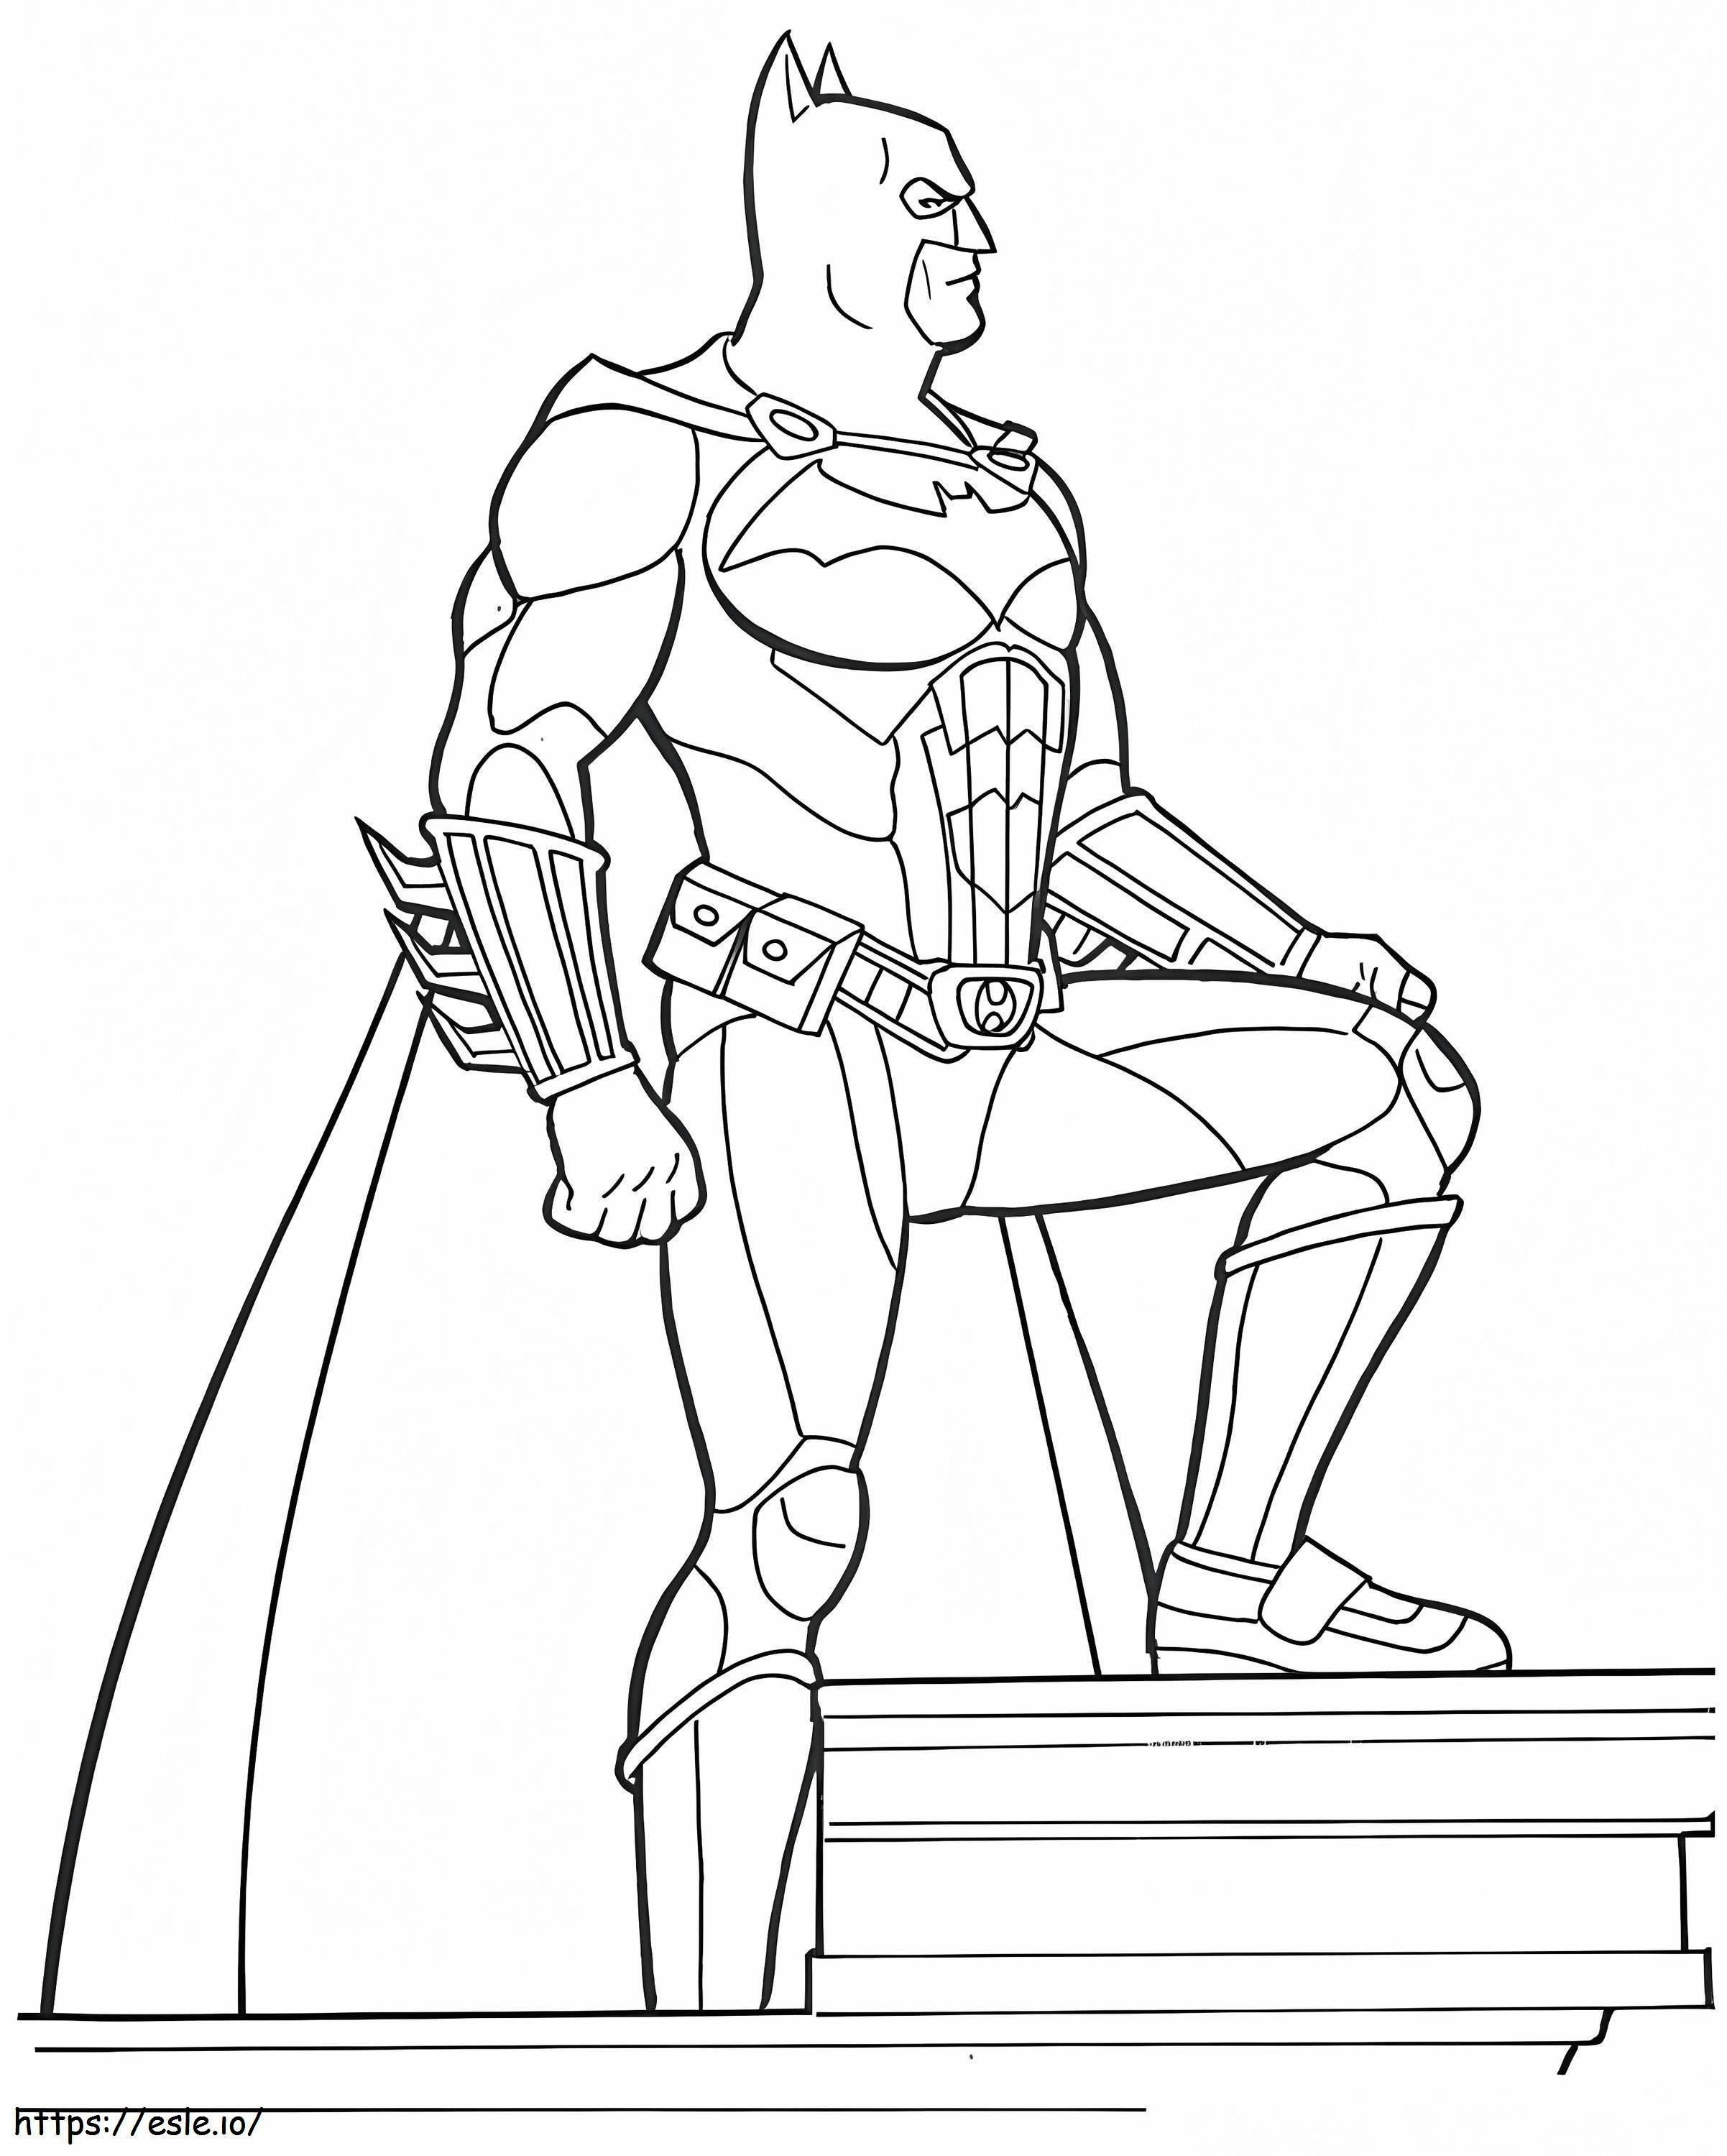 Batman On Building coloring page